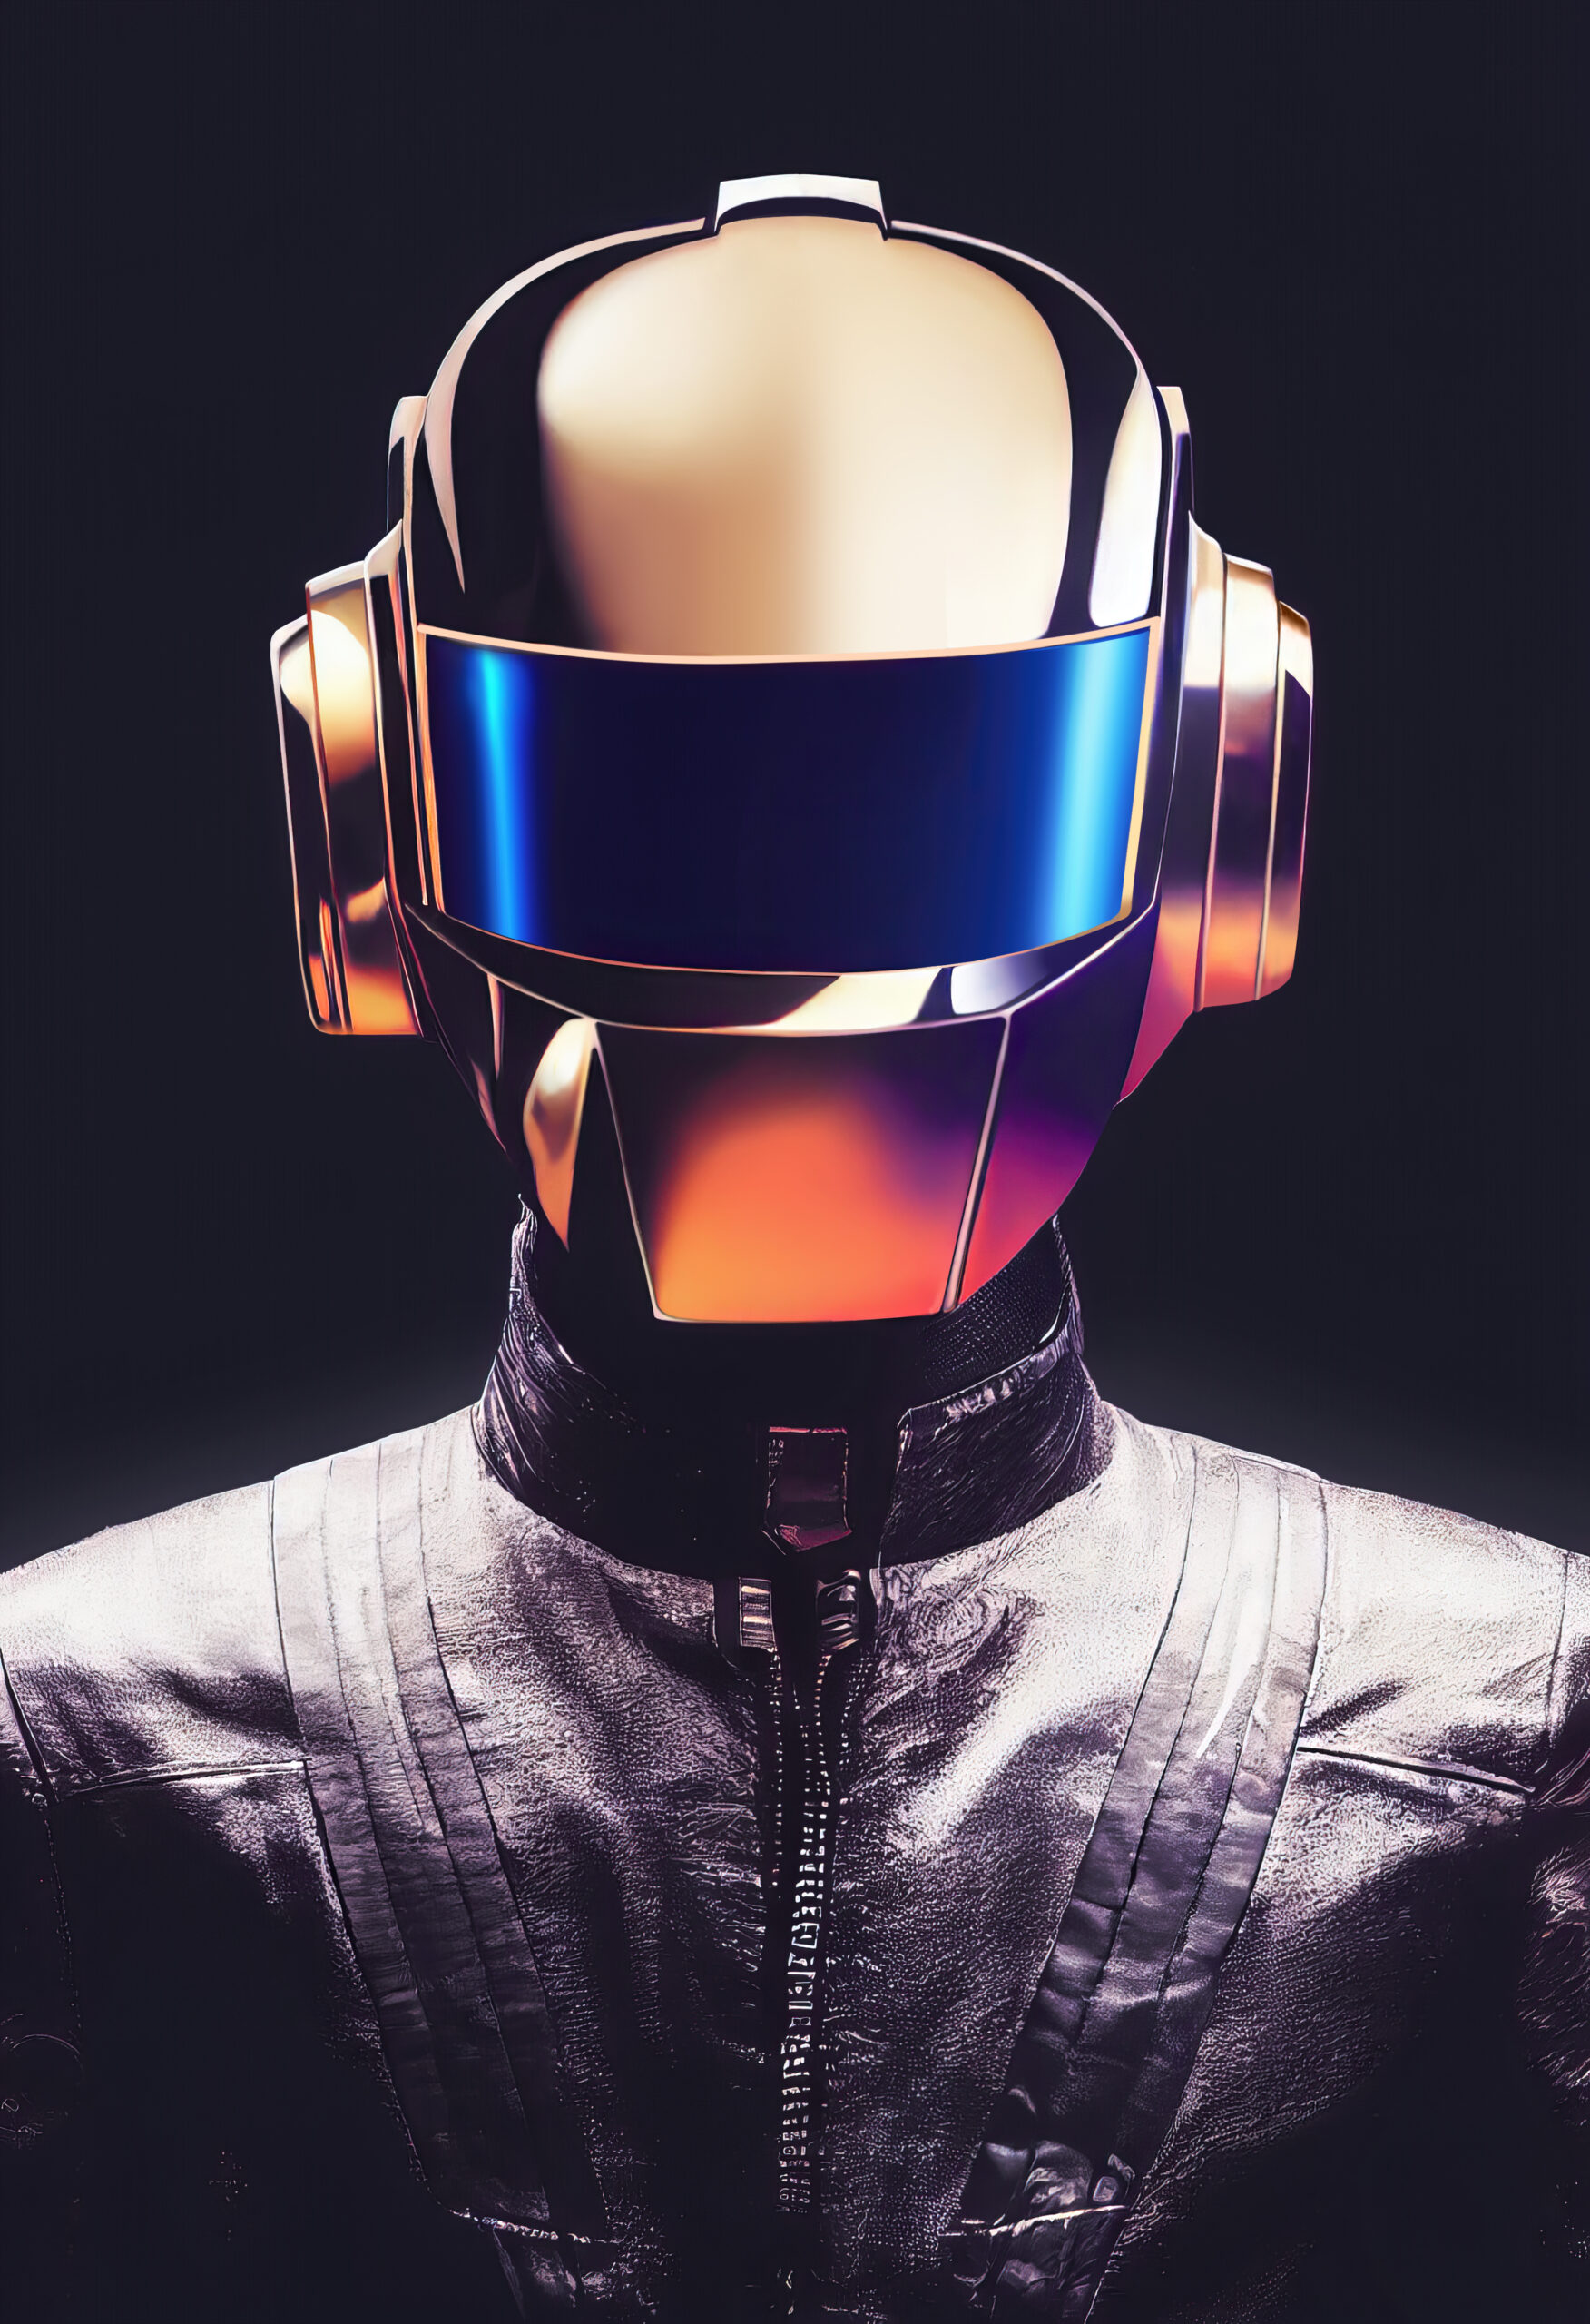 https://mindmatters.ai/wp-content/uploads/sites/2/2023/04/Daft-Punk-headset-scaled.jpg